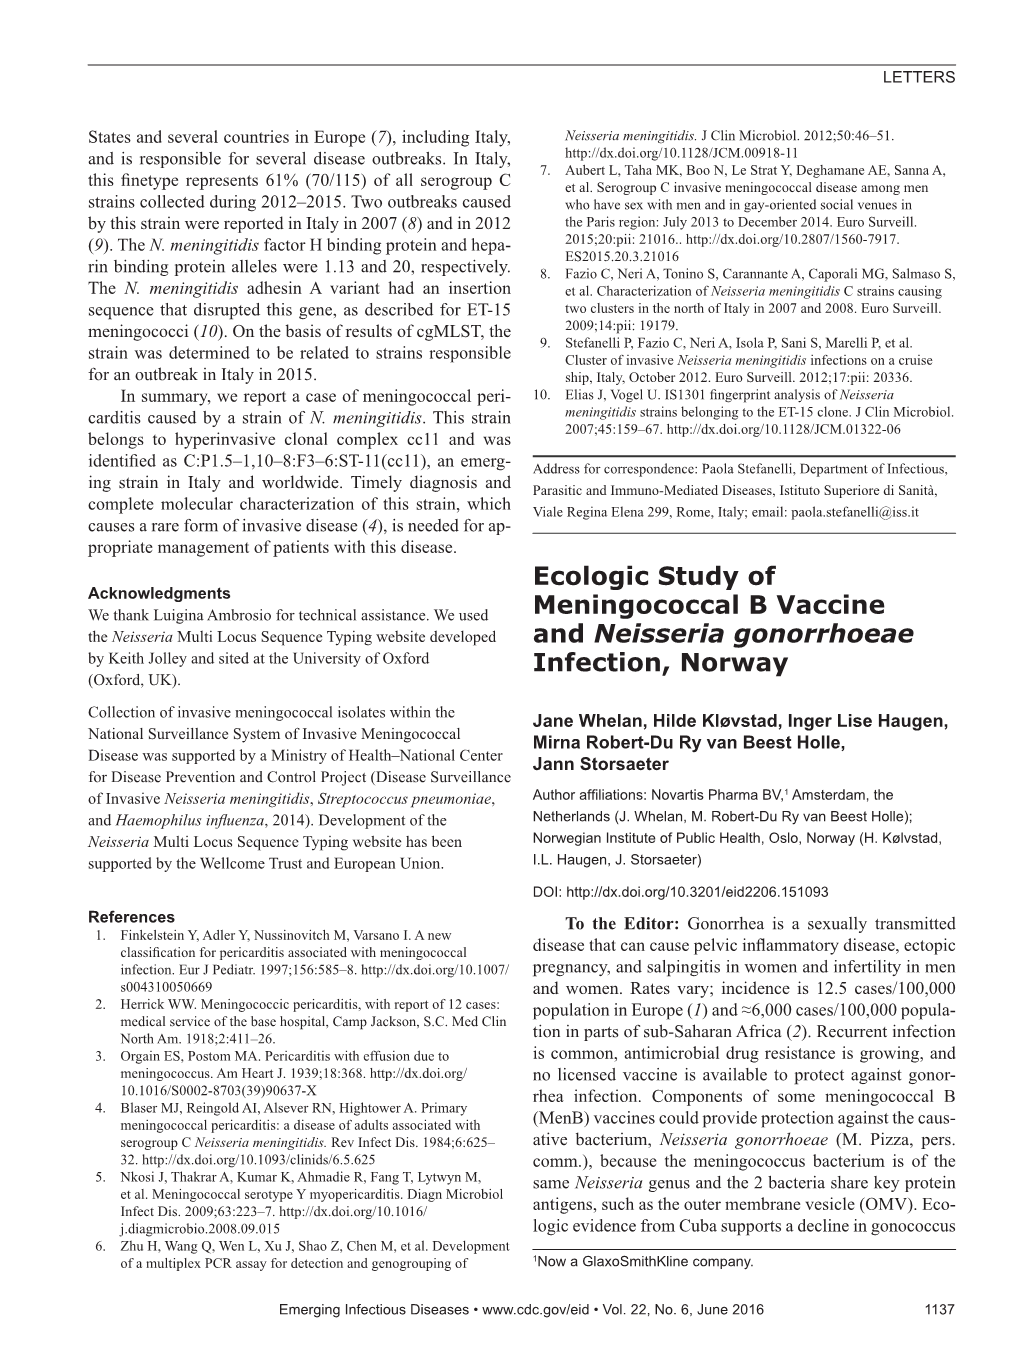 Ecologic Study of Meningococcal B Vaccine and Neisseria